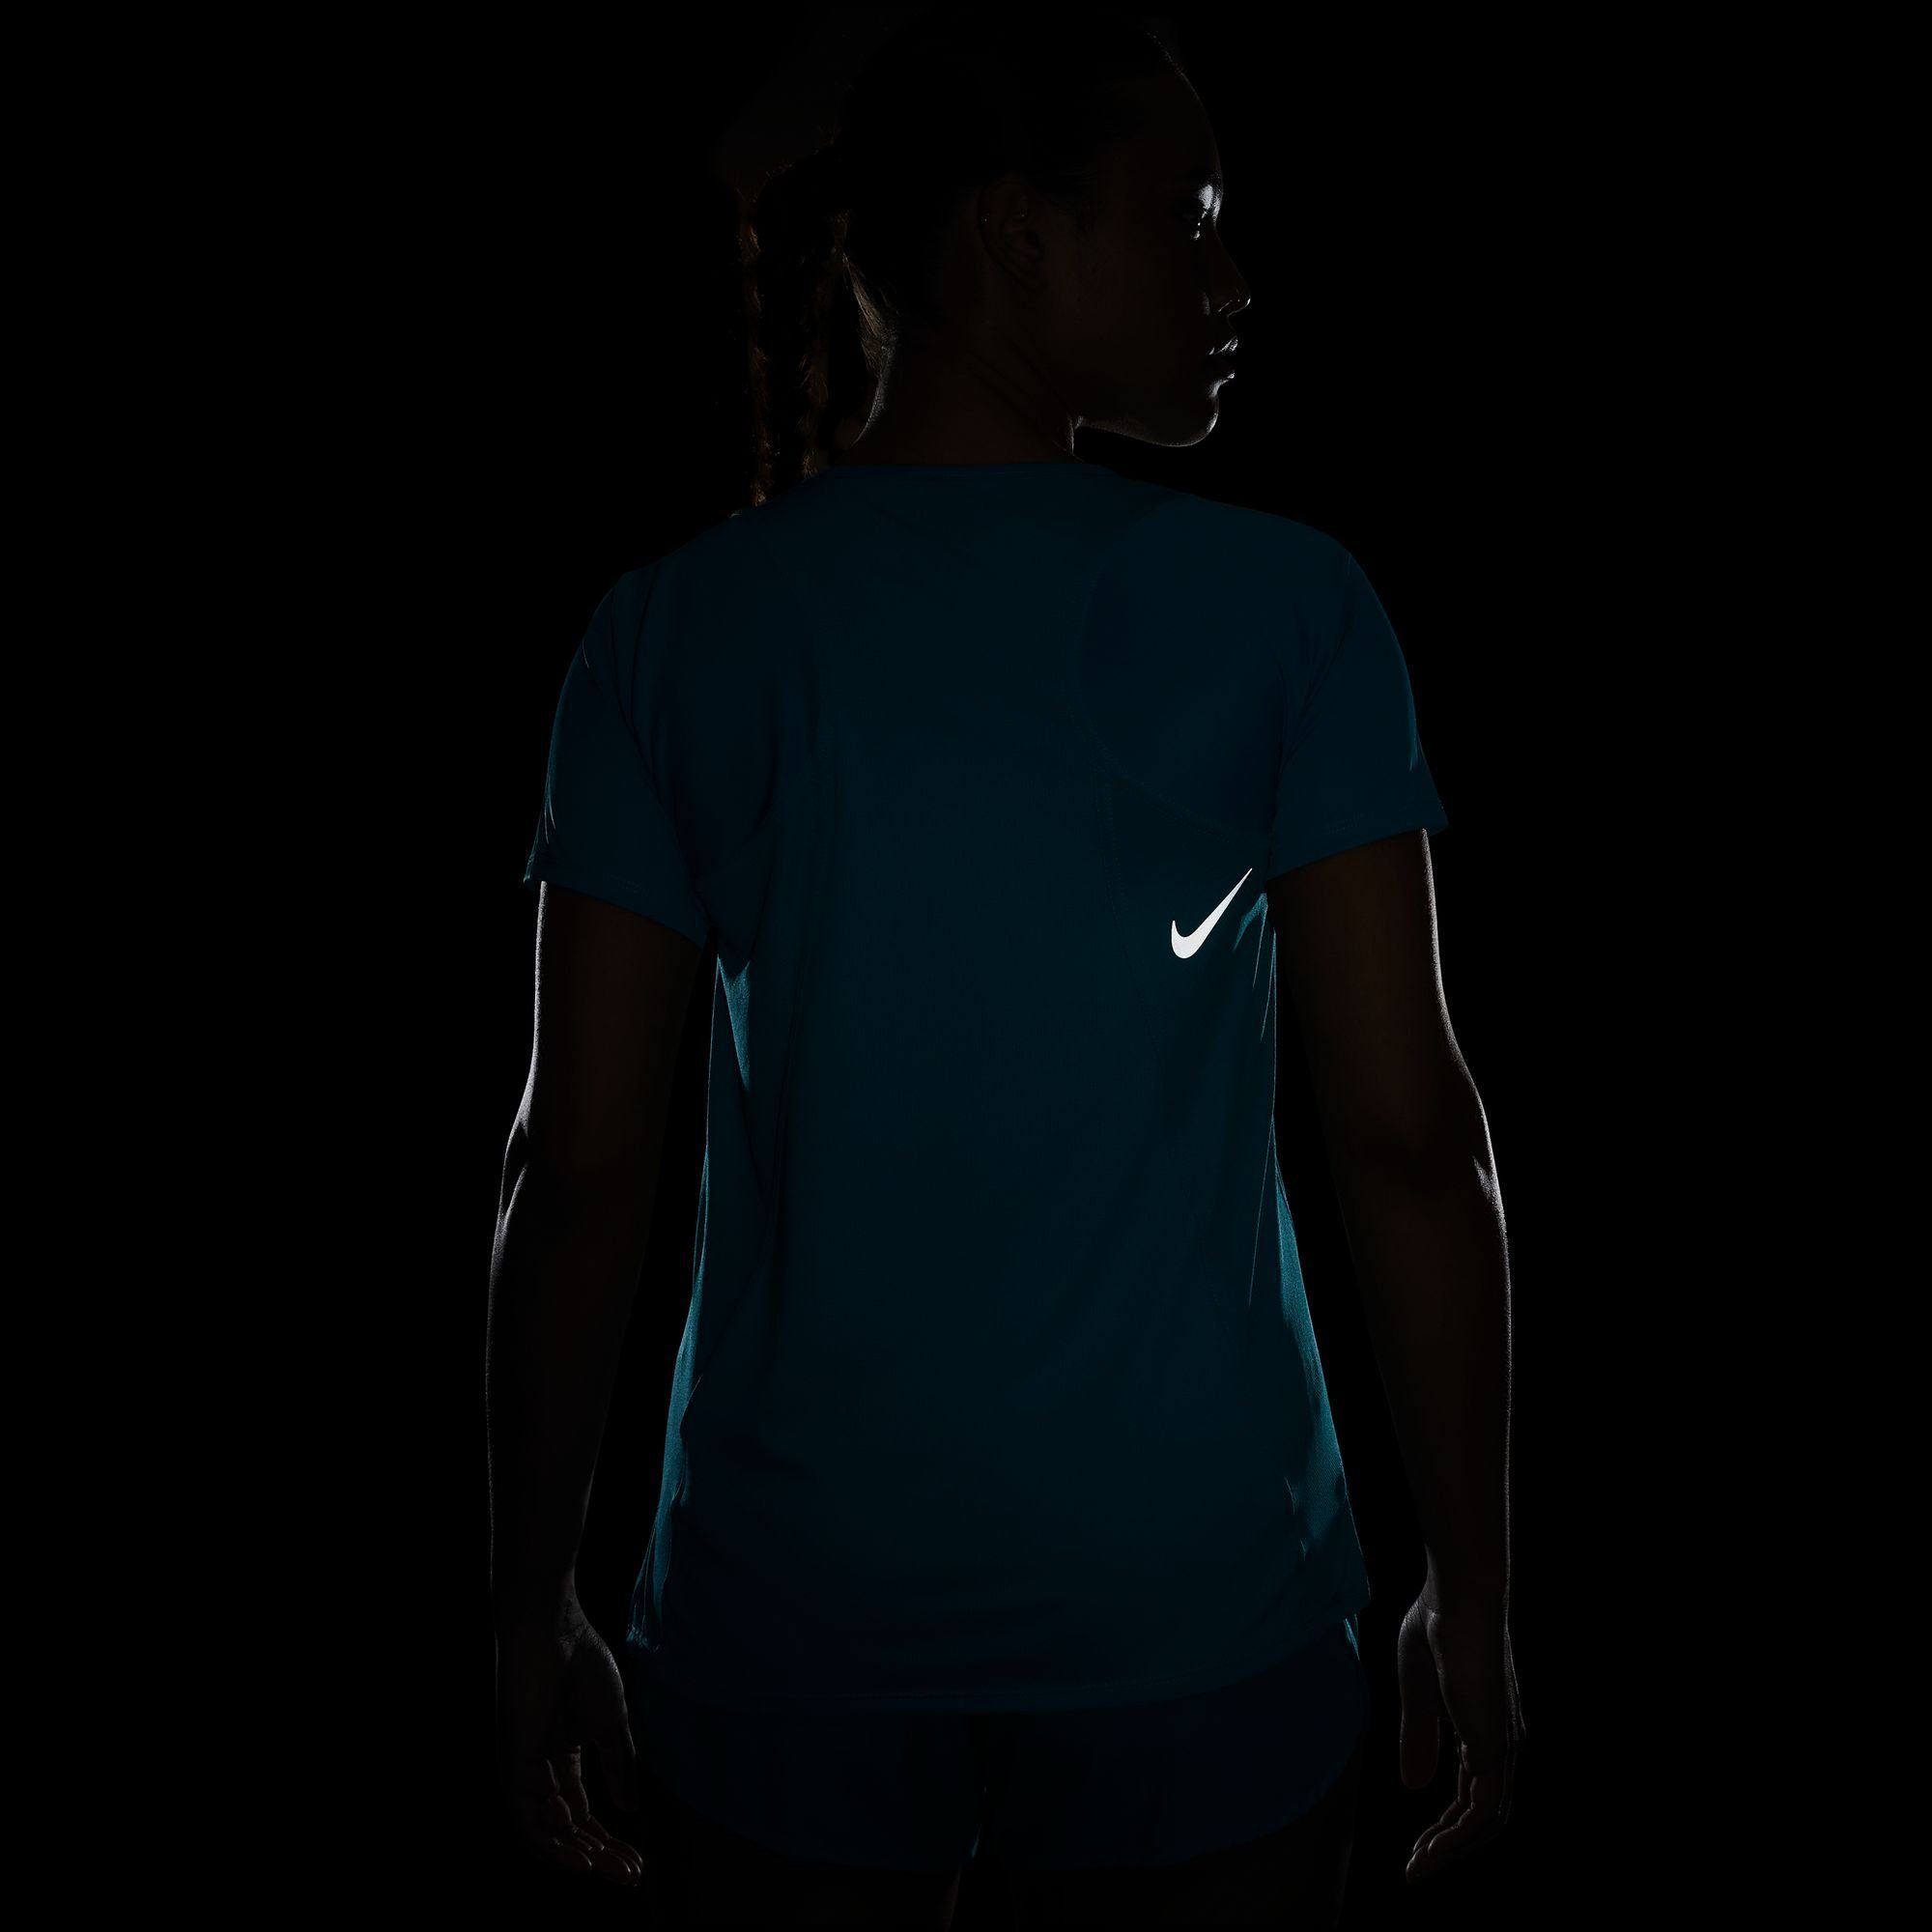 Nike Laufshirt DRI-FIT TEAL/REFLECTIVE TOP RACE RAPID RUNNING SHORT-SLEEVE SILV WOMEN'S